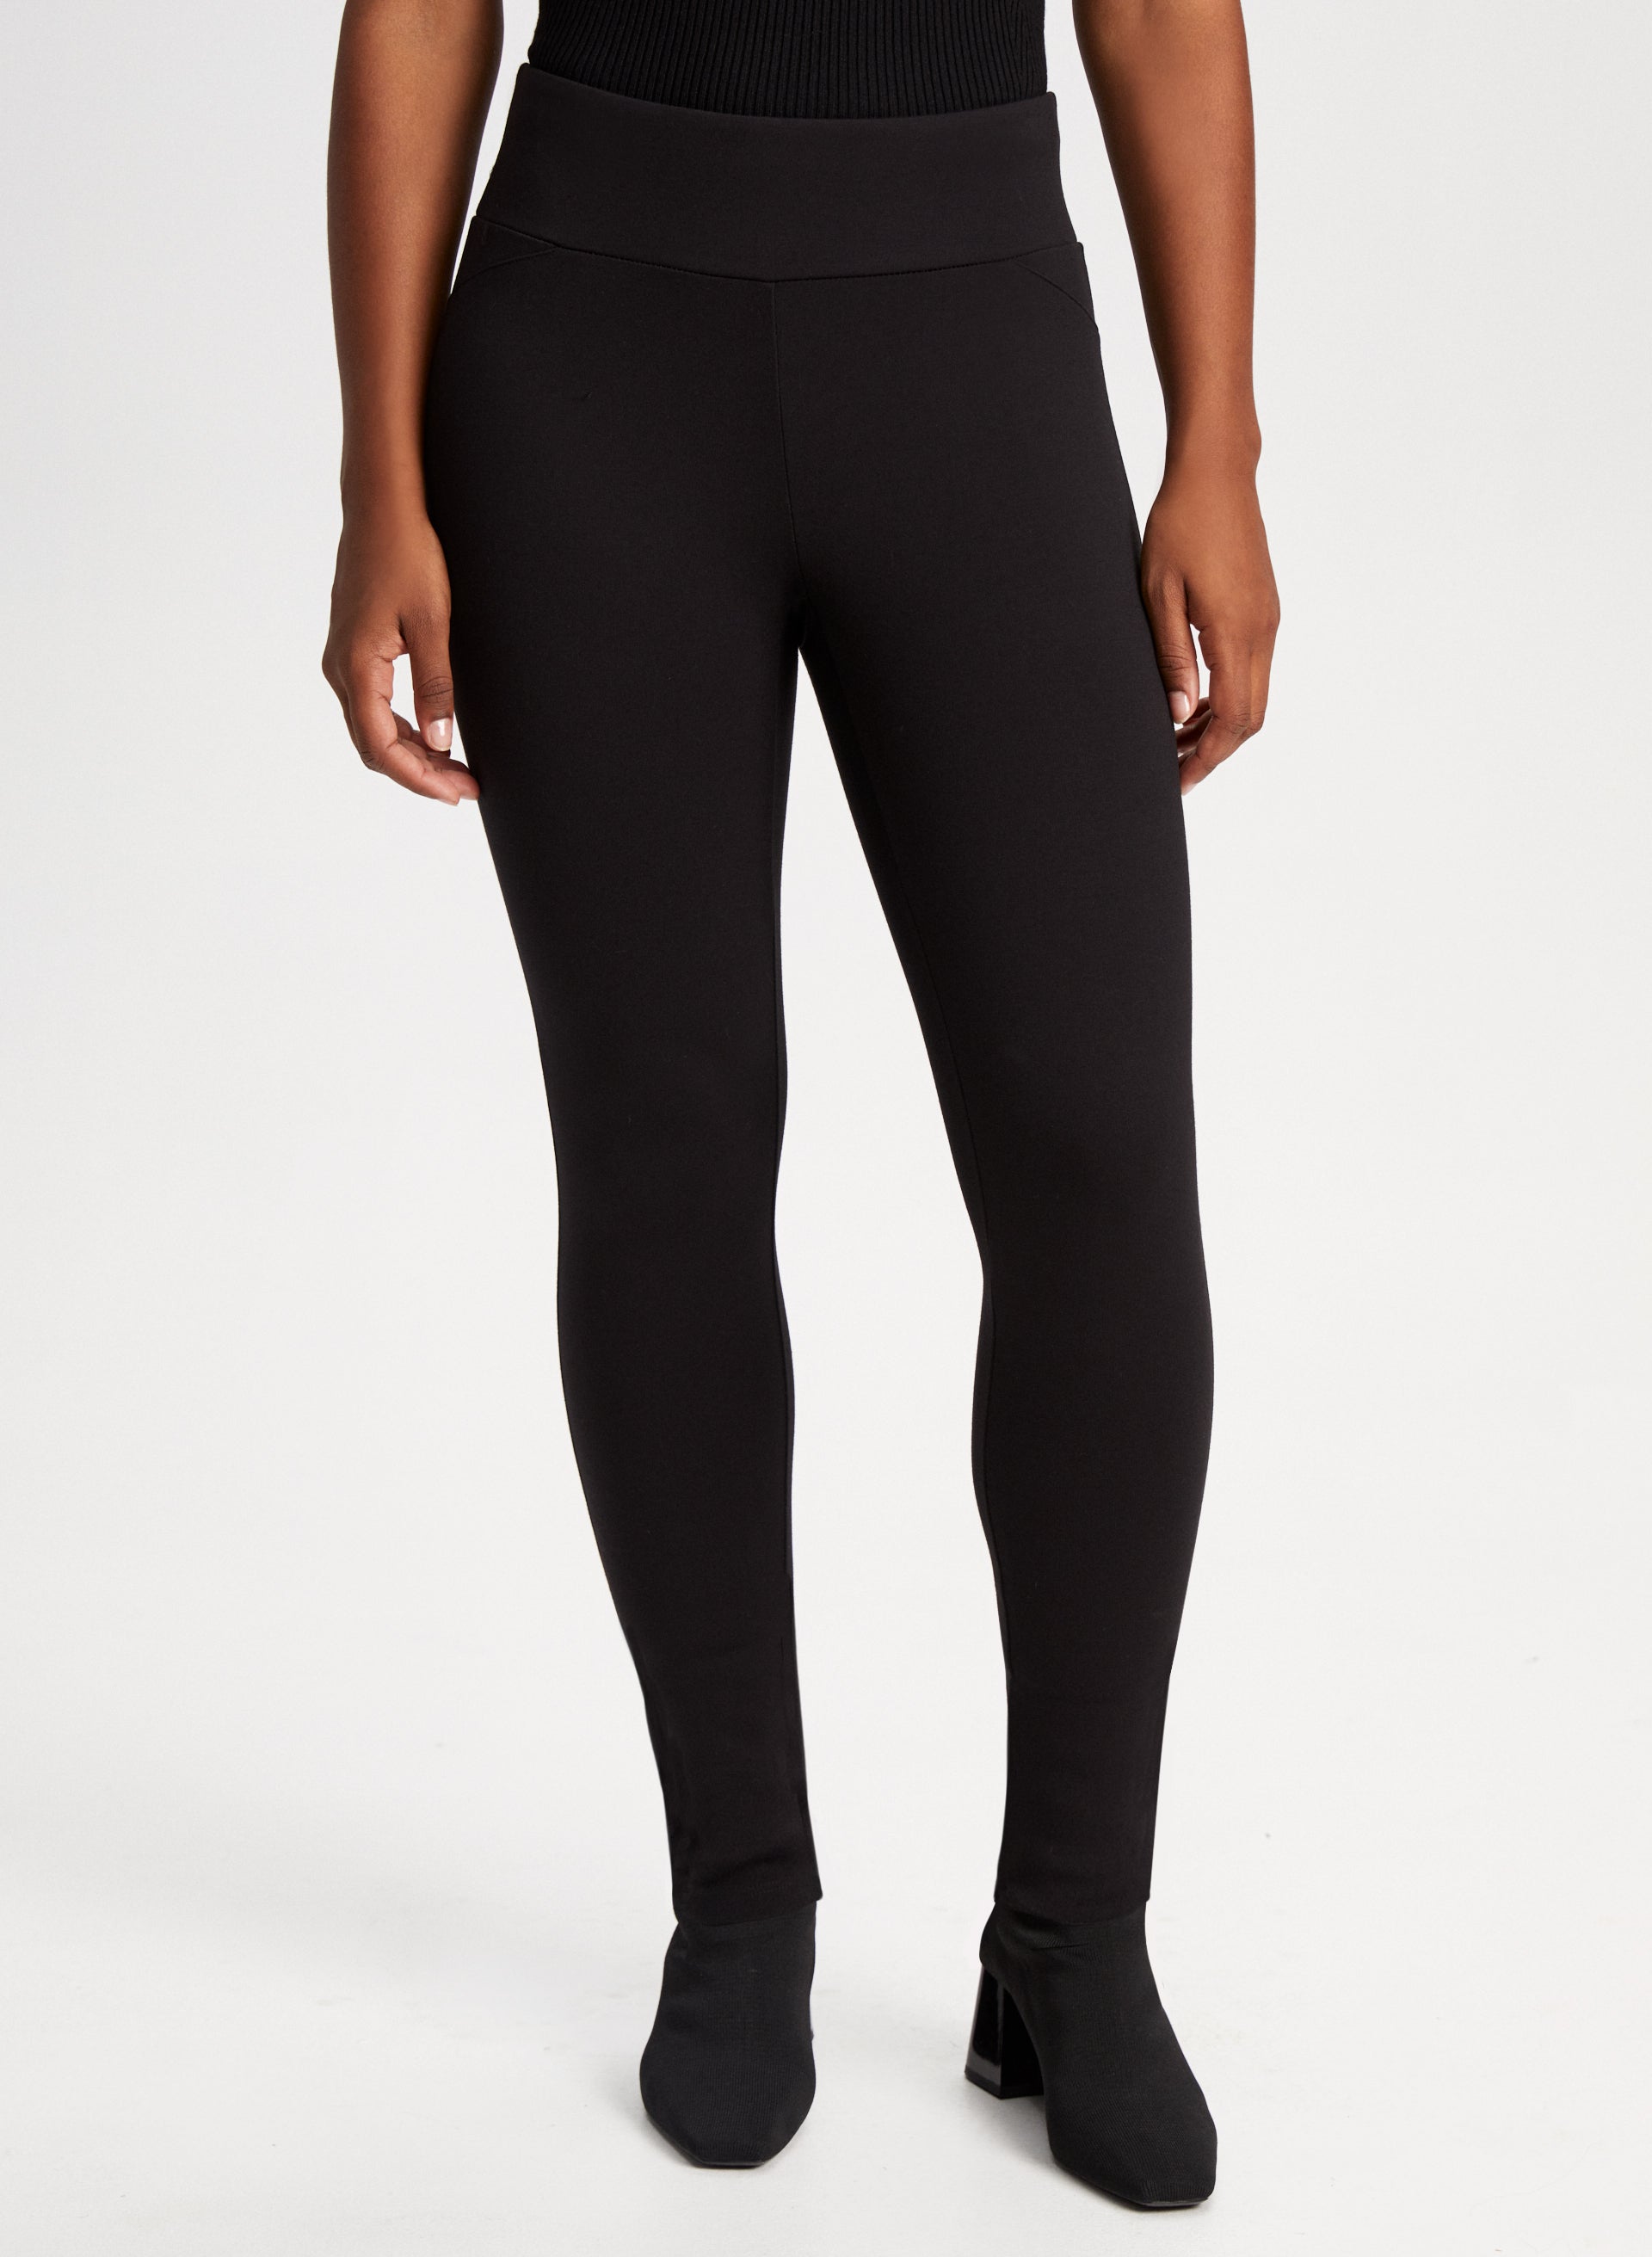 Essential 2 in 1 Leggings - Black, Women's Trousers